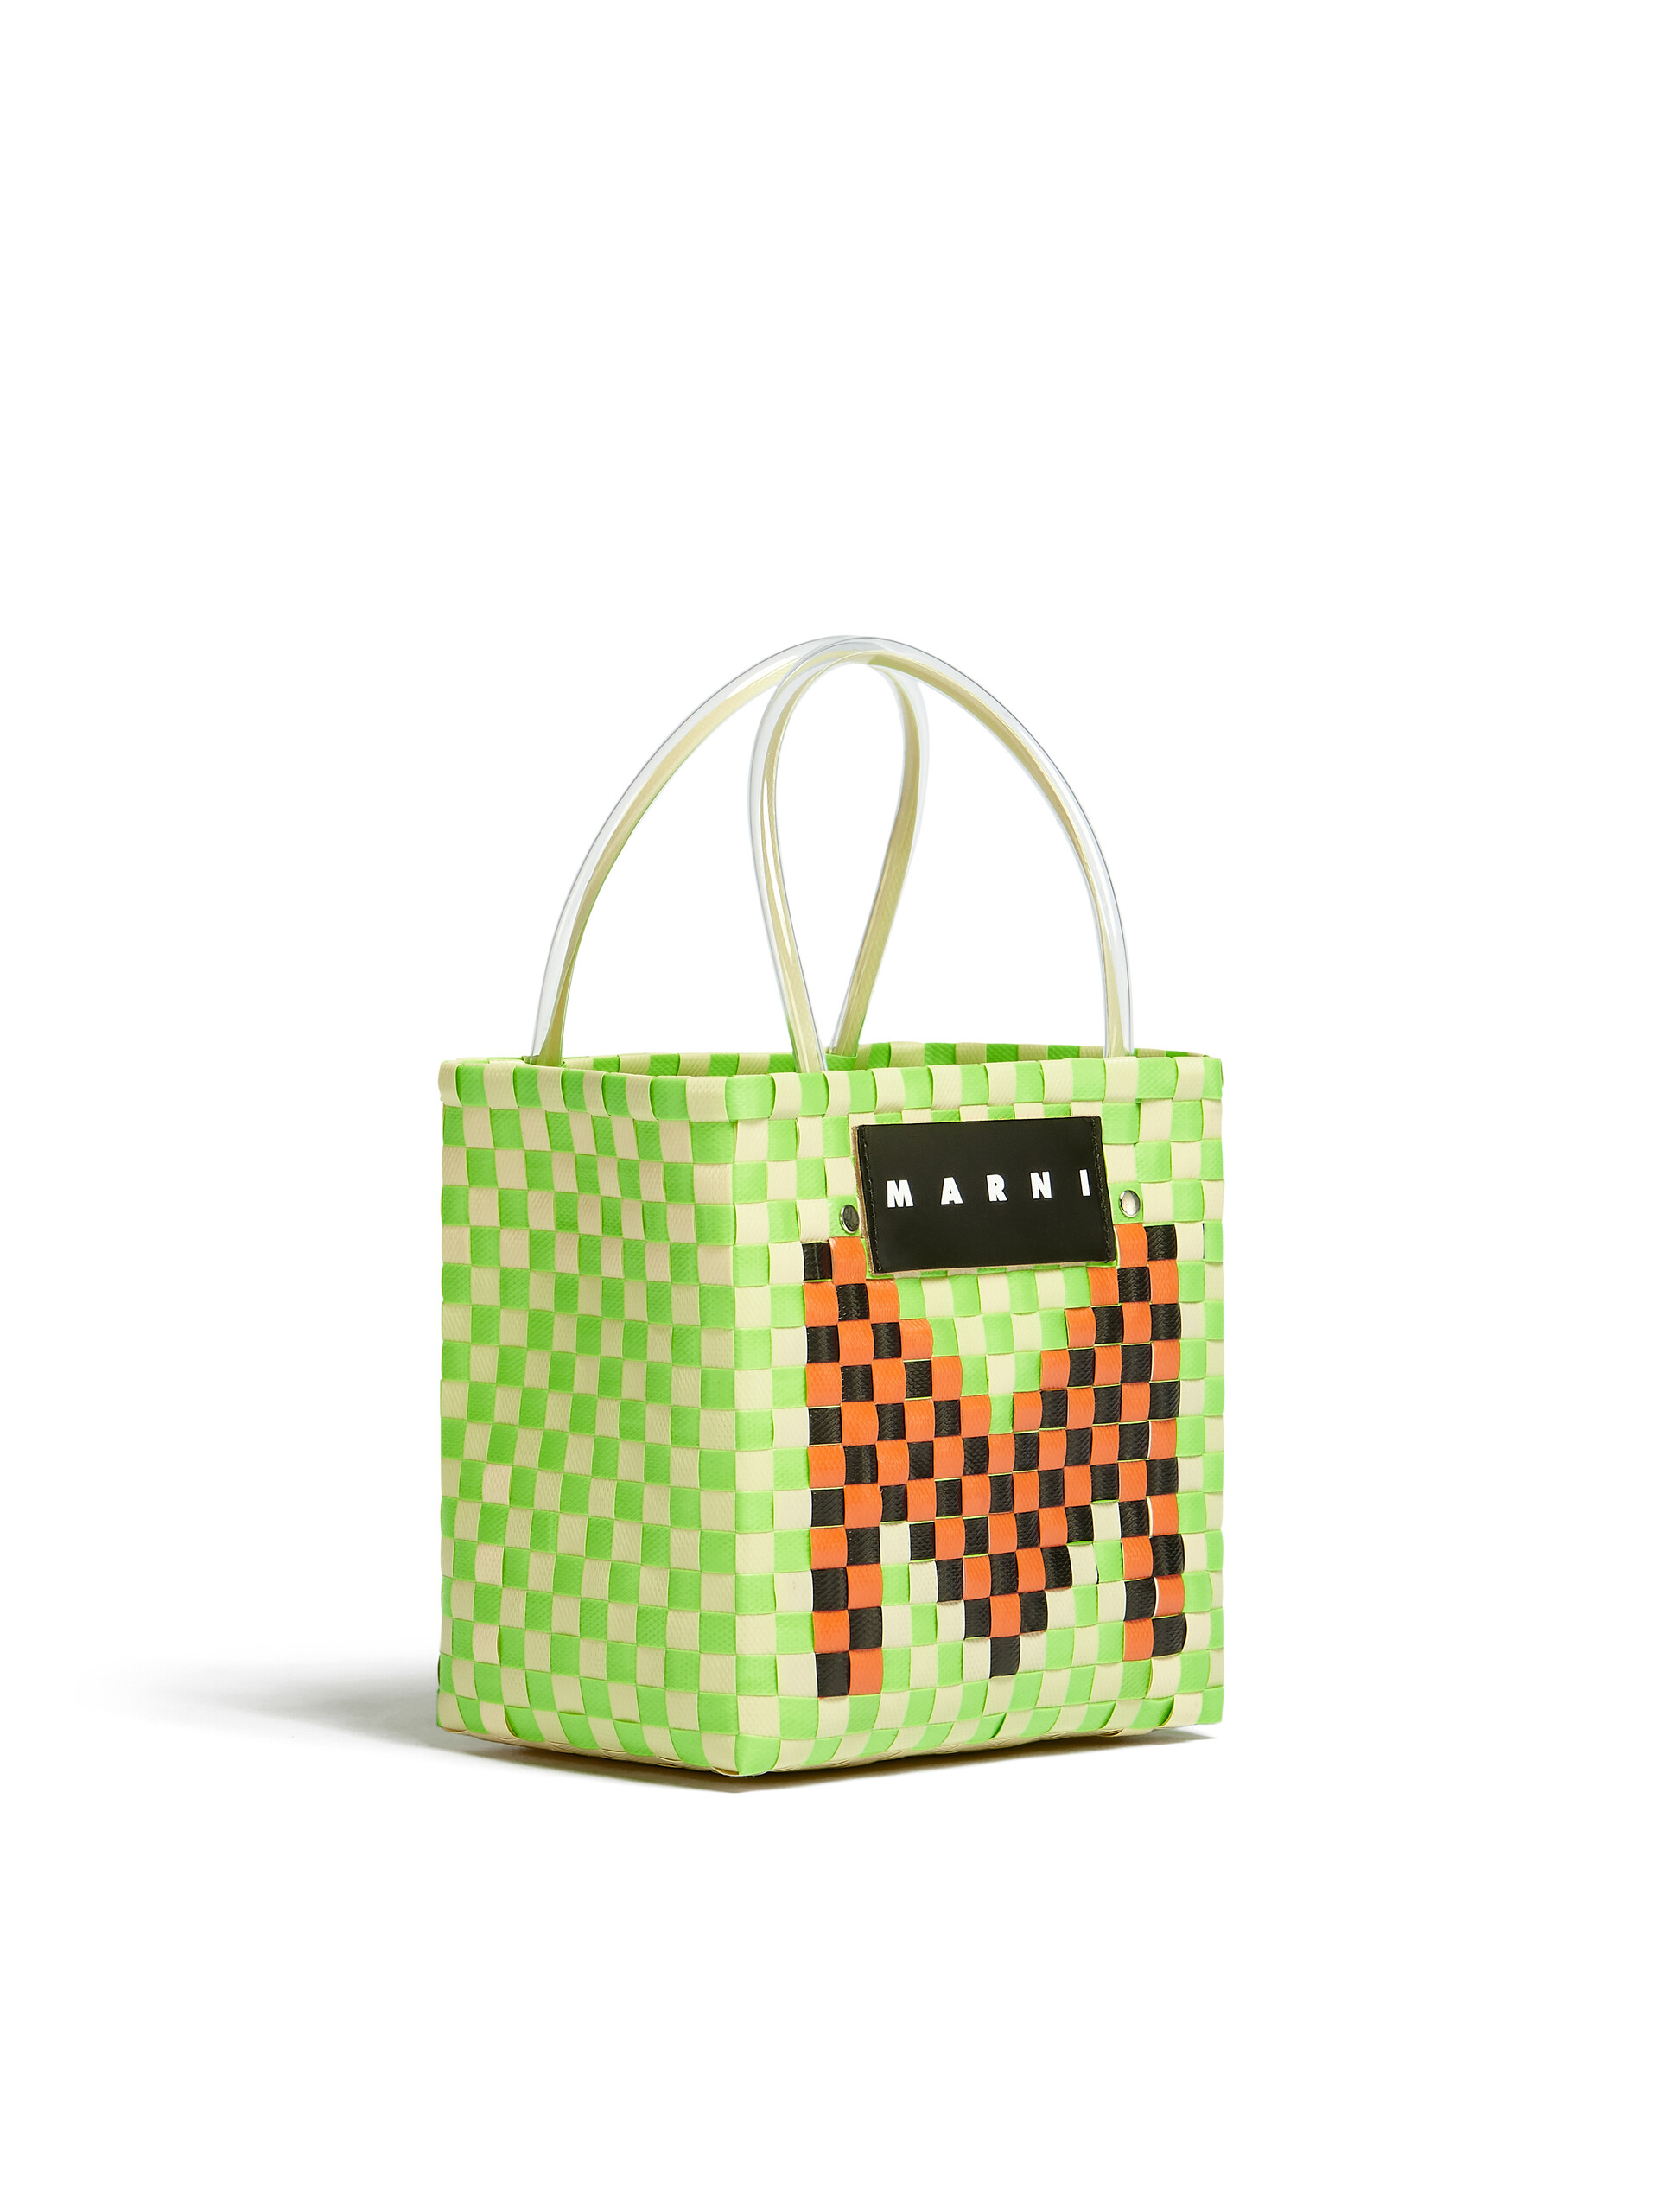 MARNI MARKET mini bag in polypropylene with green M logo - Bags - Image 2